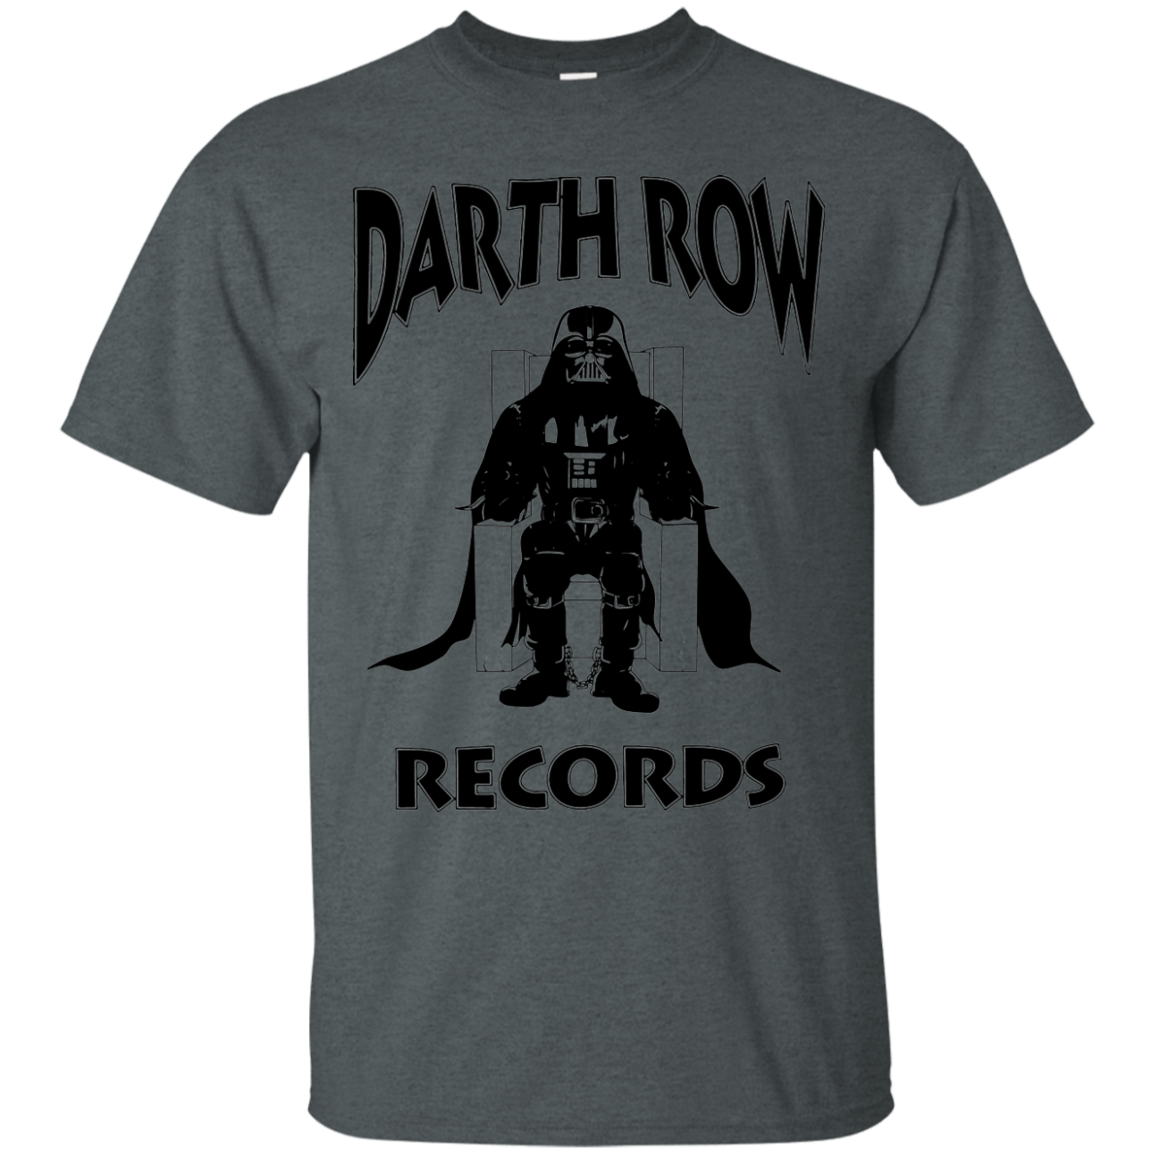 Darth Row Records T-Shirt